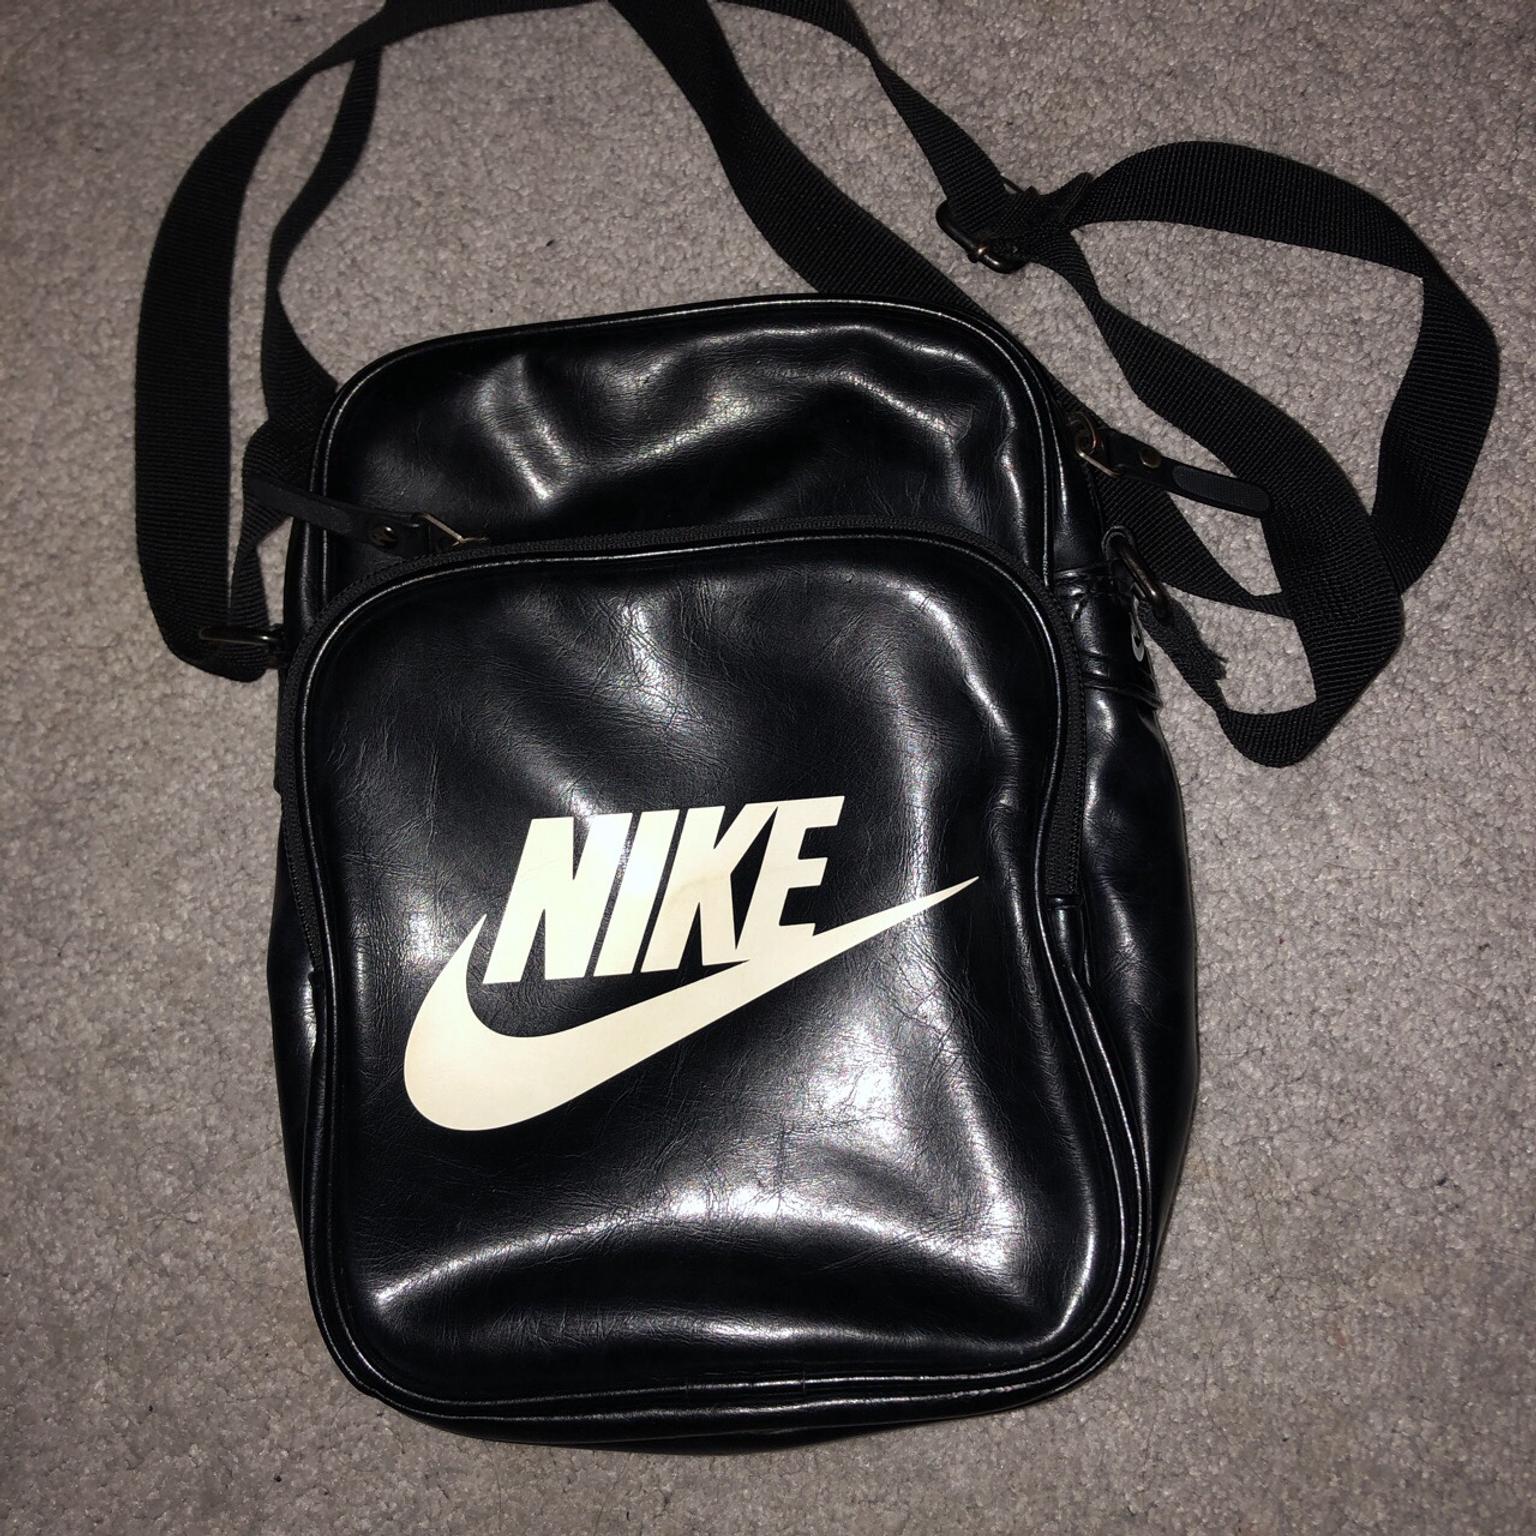 nike leather man bag